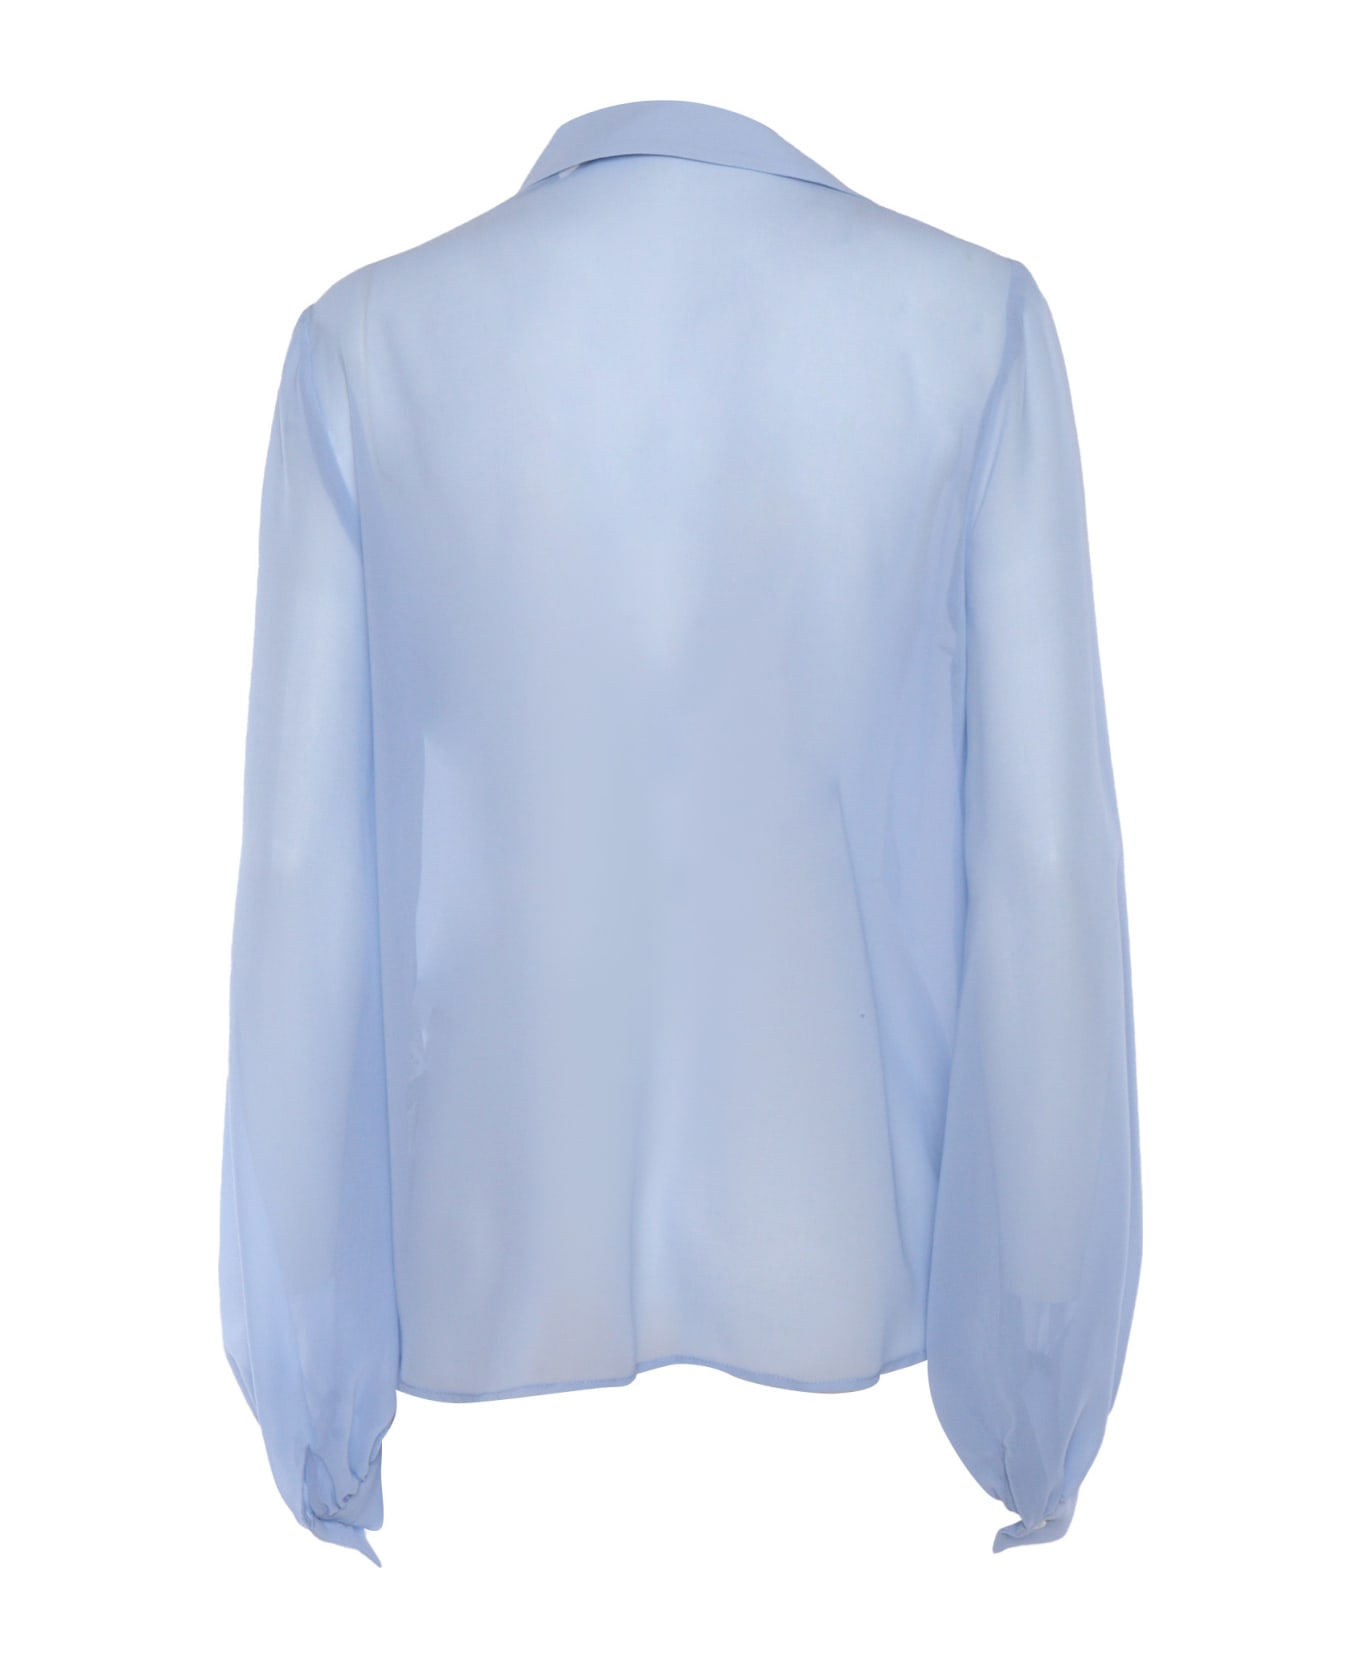 Parosh Light Blue Shirt With Lace - LIGHT BLUE ブラウス